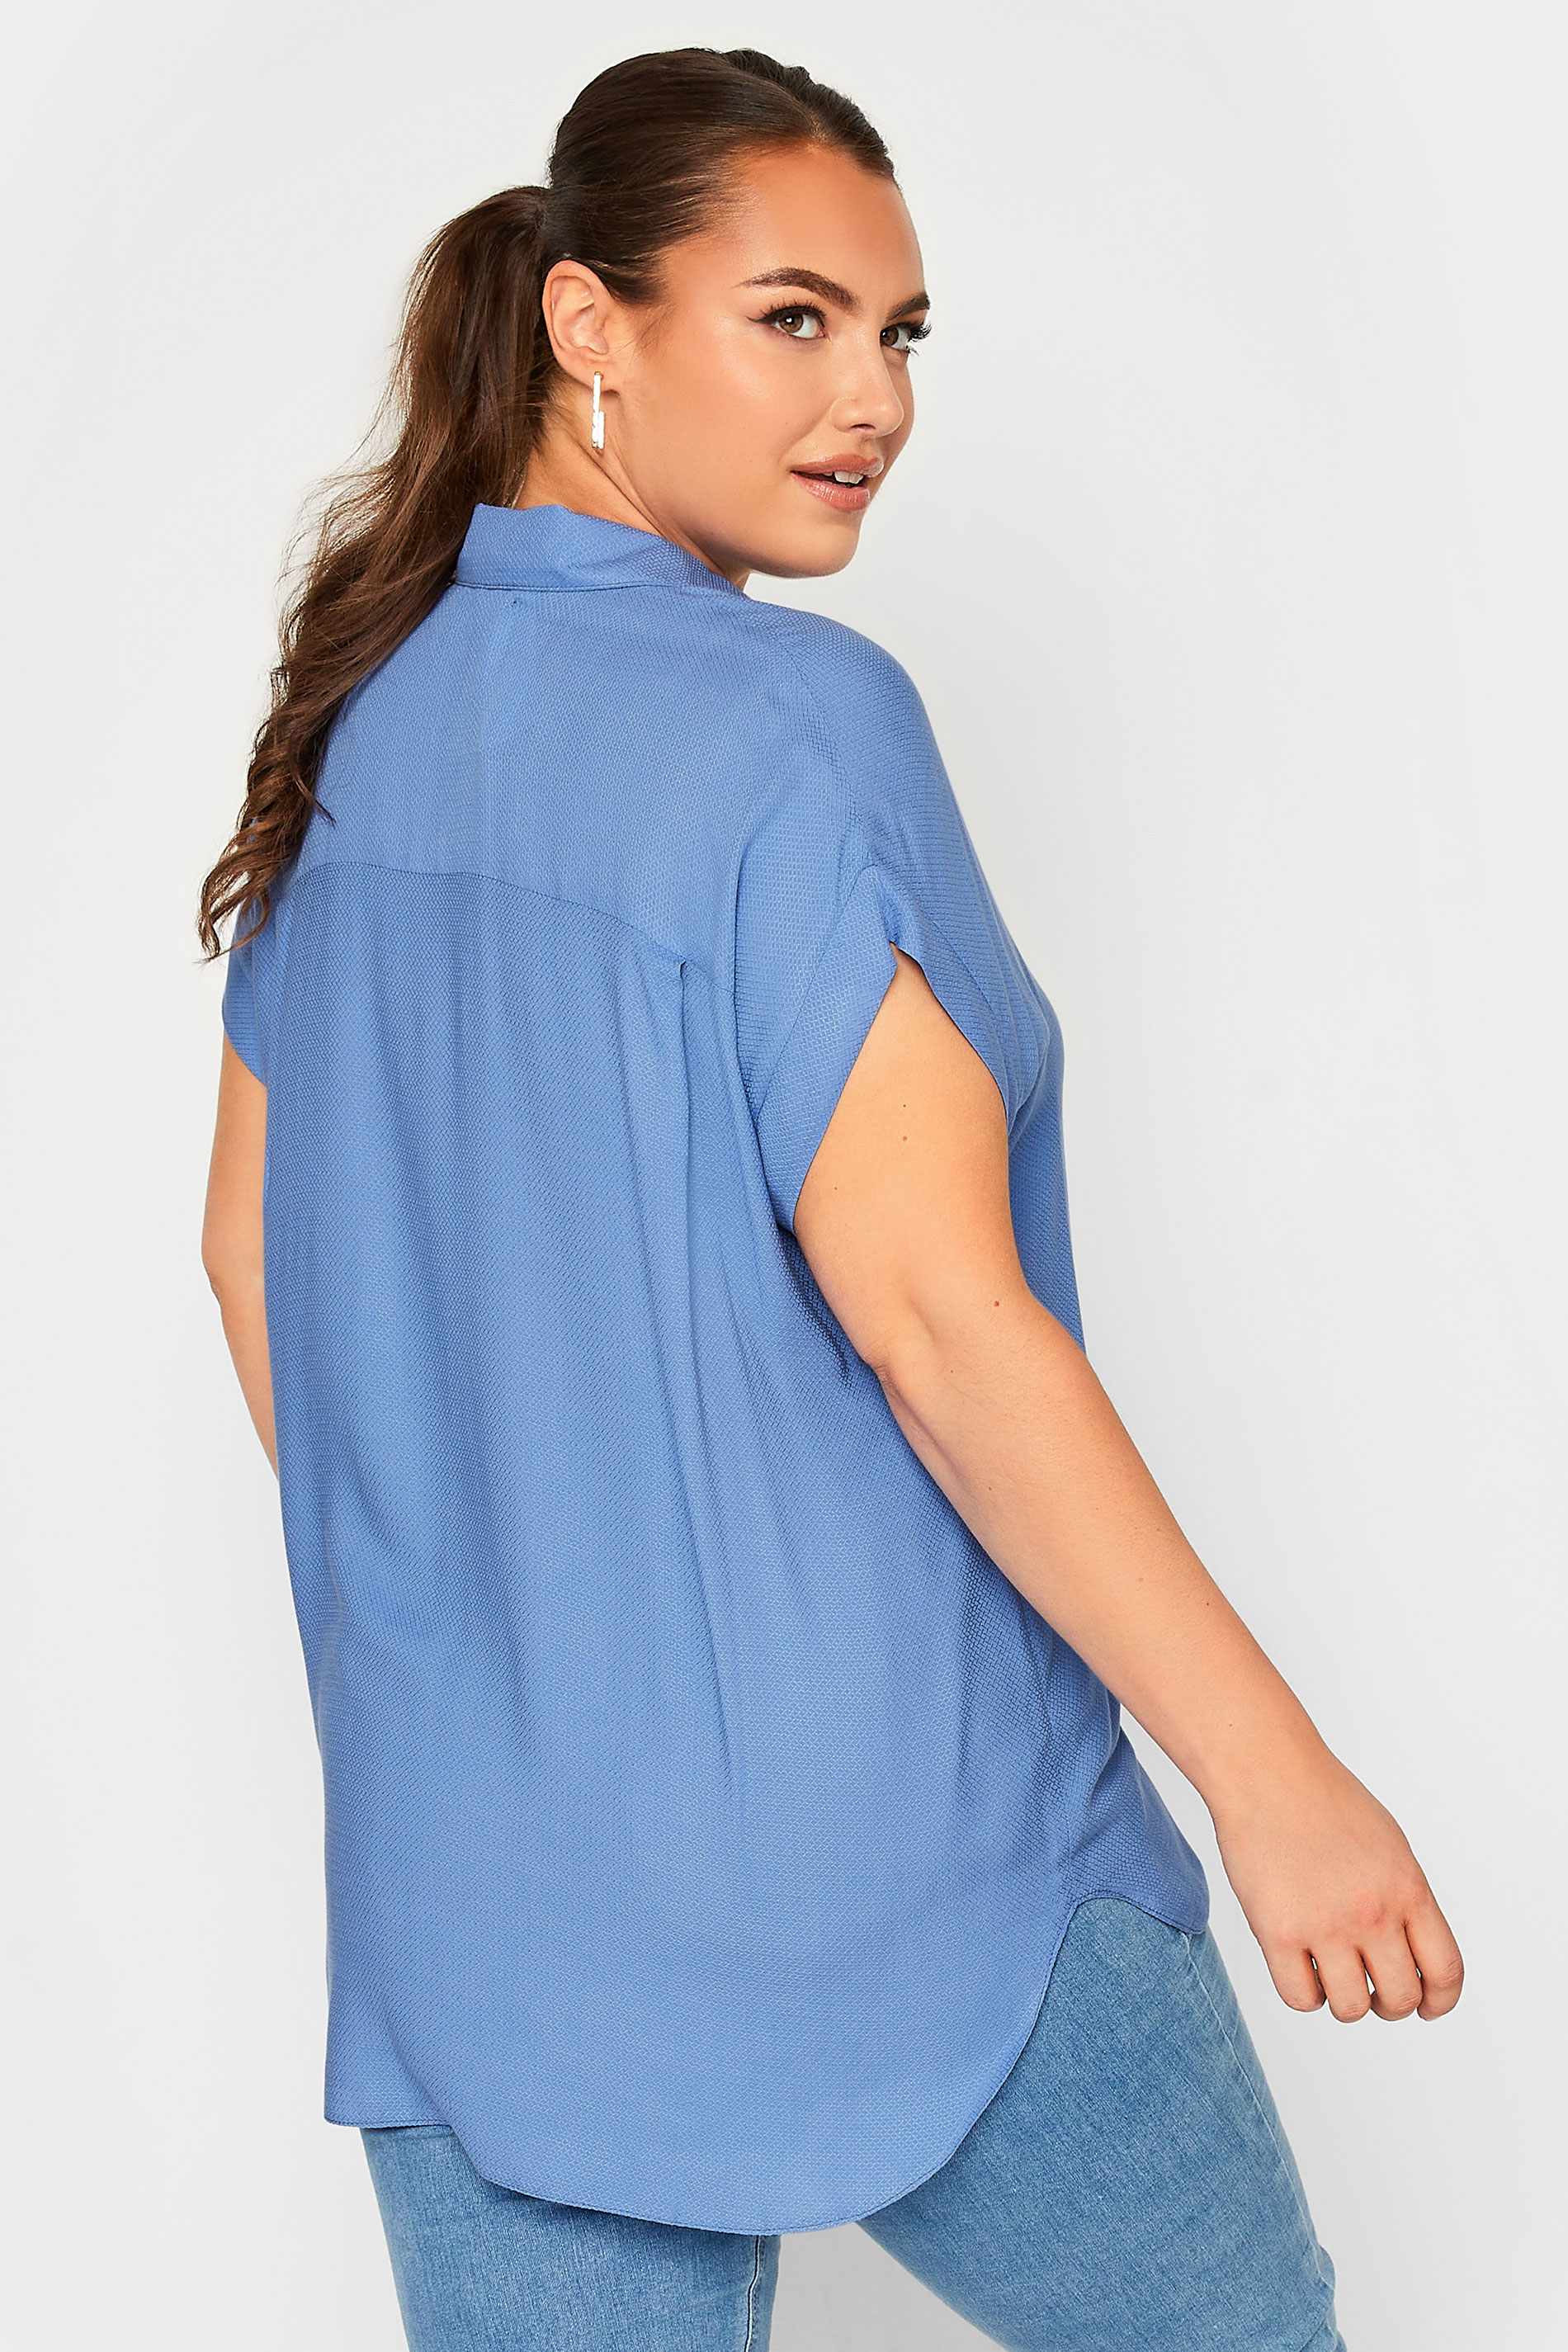 YOURS Plus Size Blue Short Sleeve Shirt | Yours Clothing 3